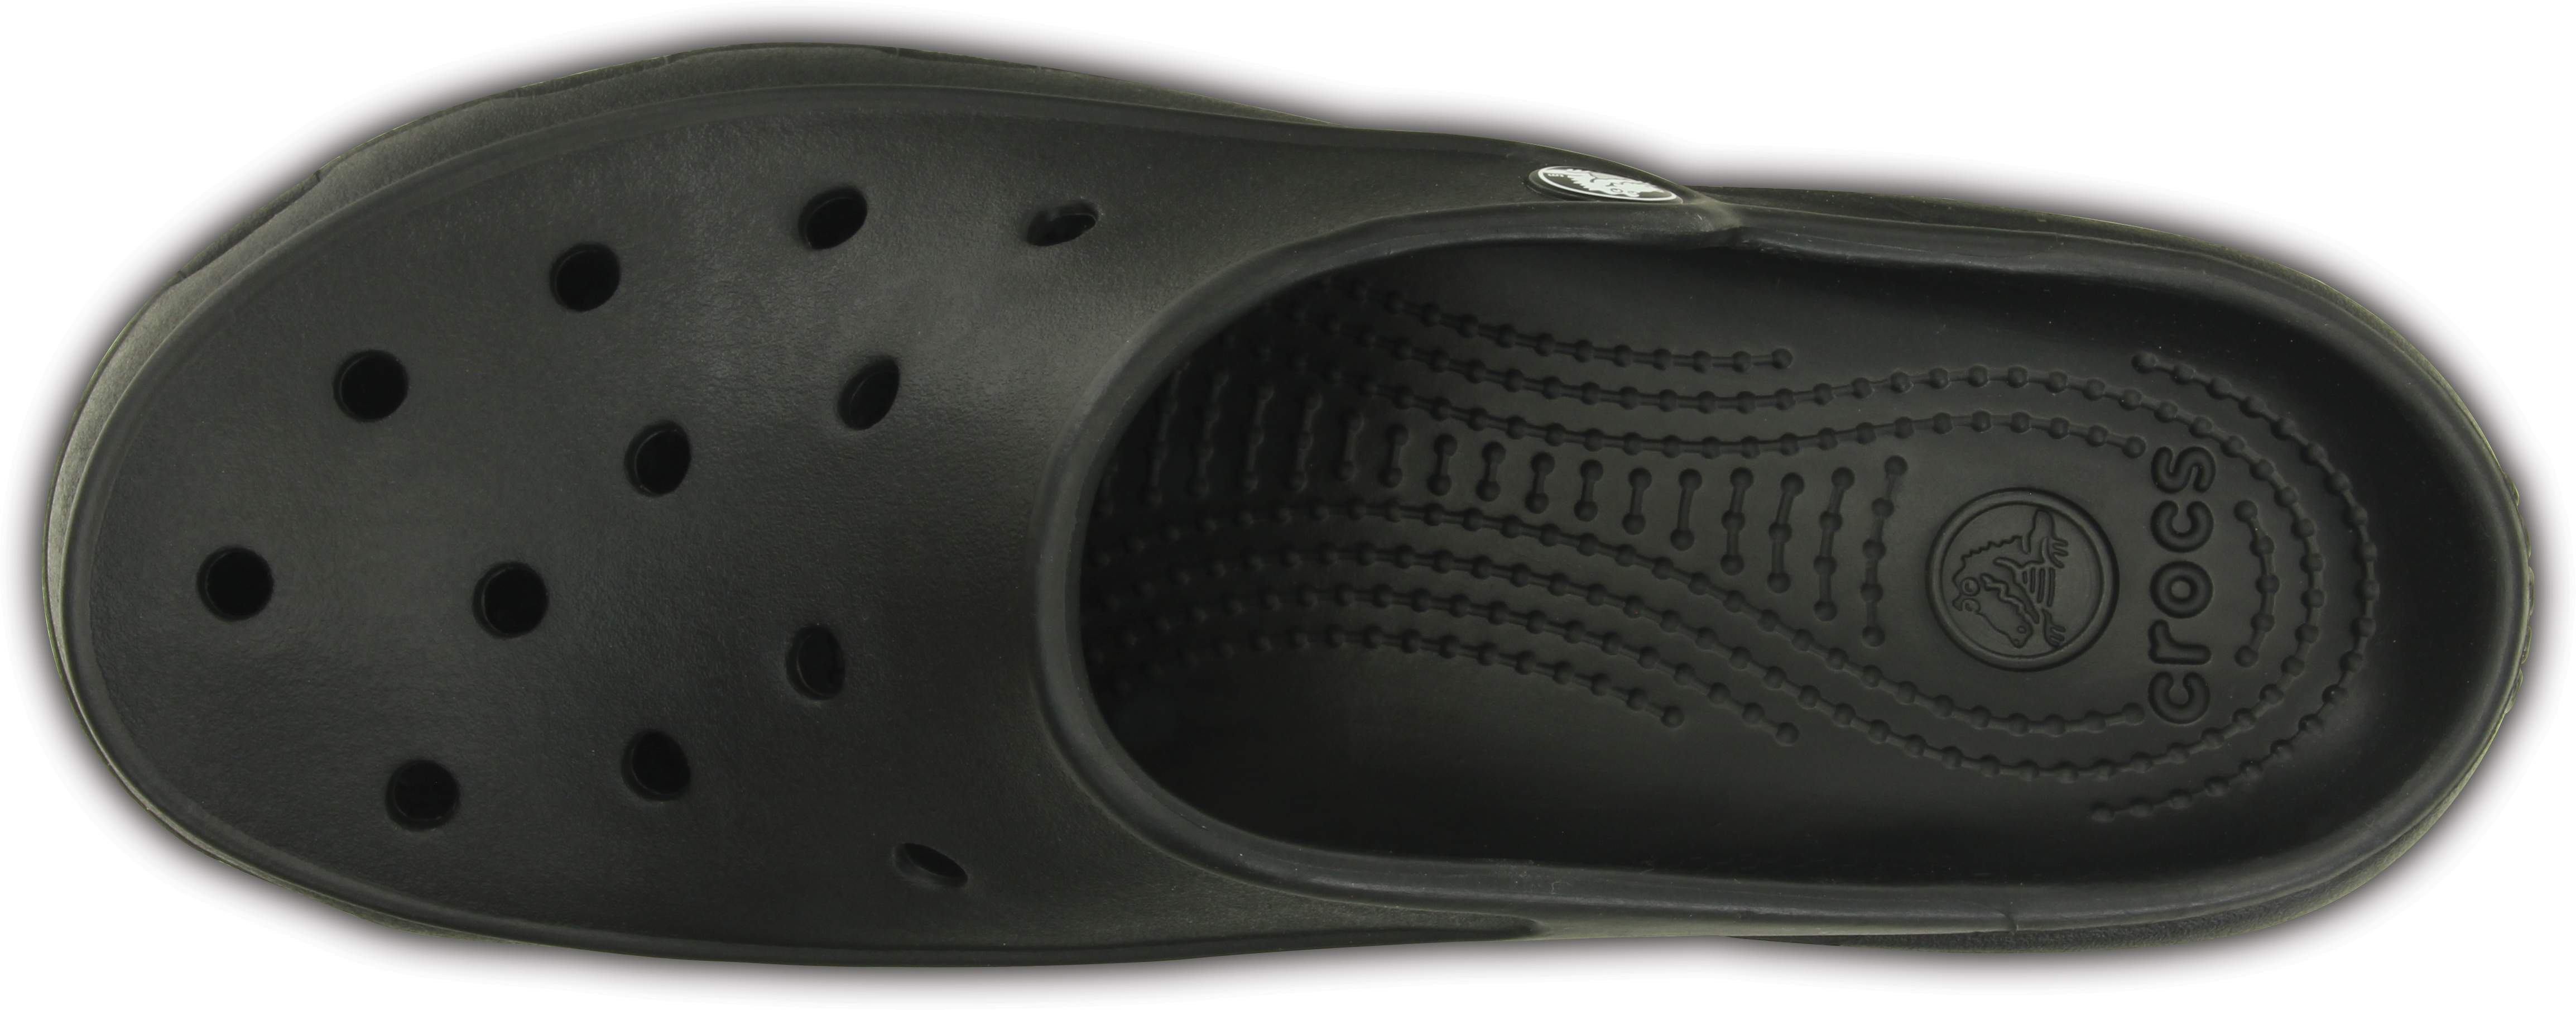 women's crocs freesail clog